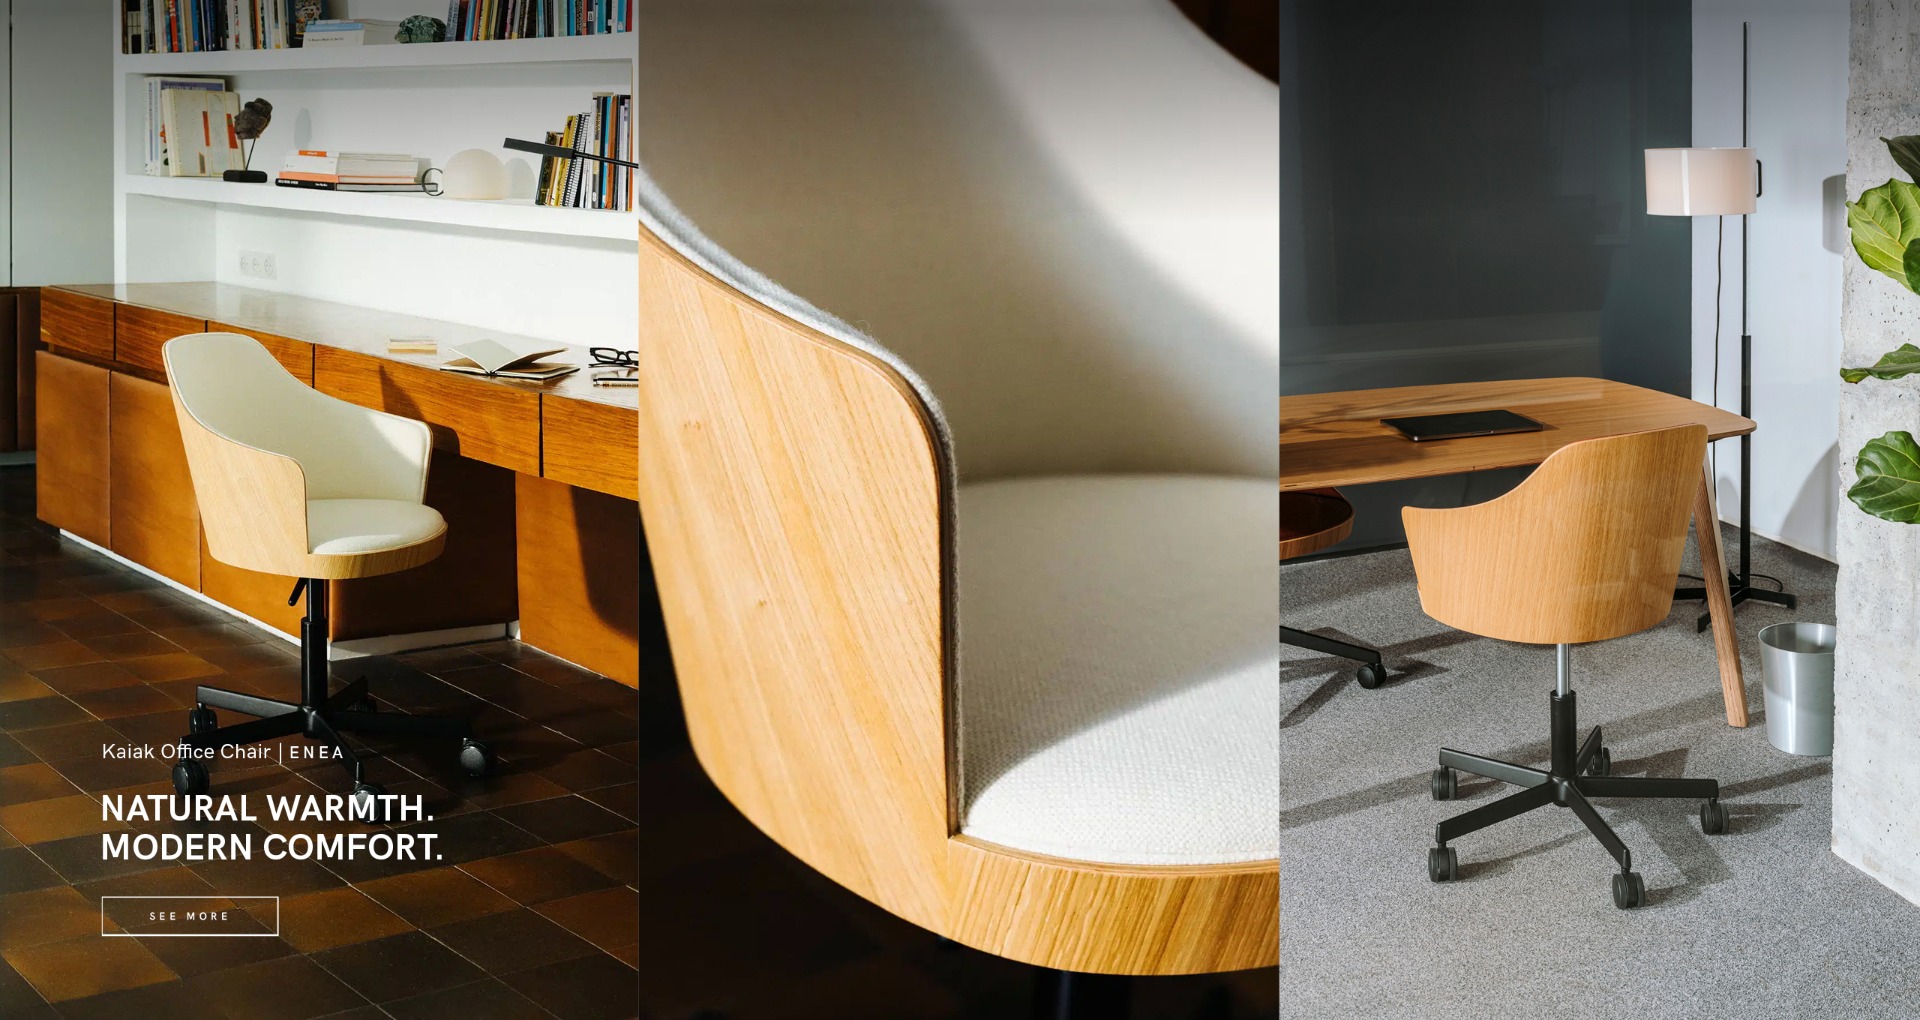 kezu enea kaiak office chair designed by Estudi Manel Molina